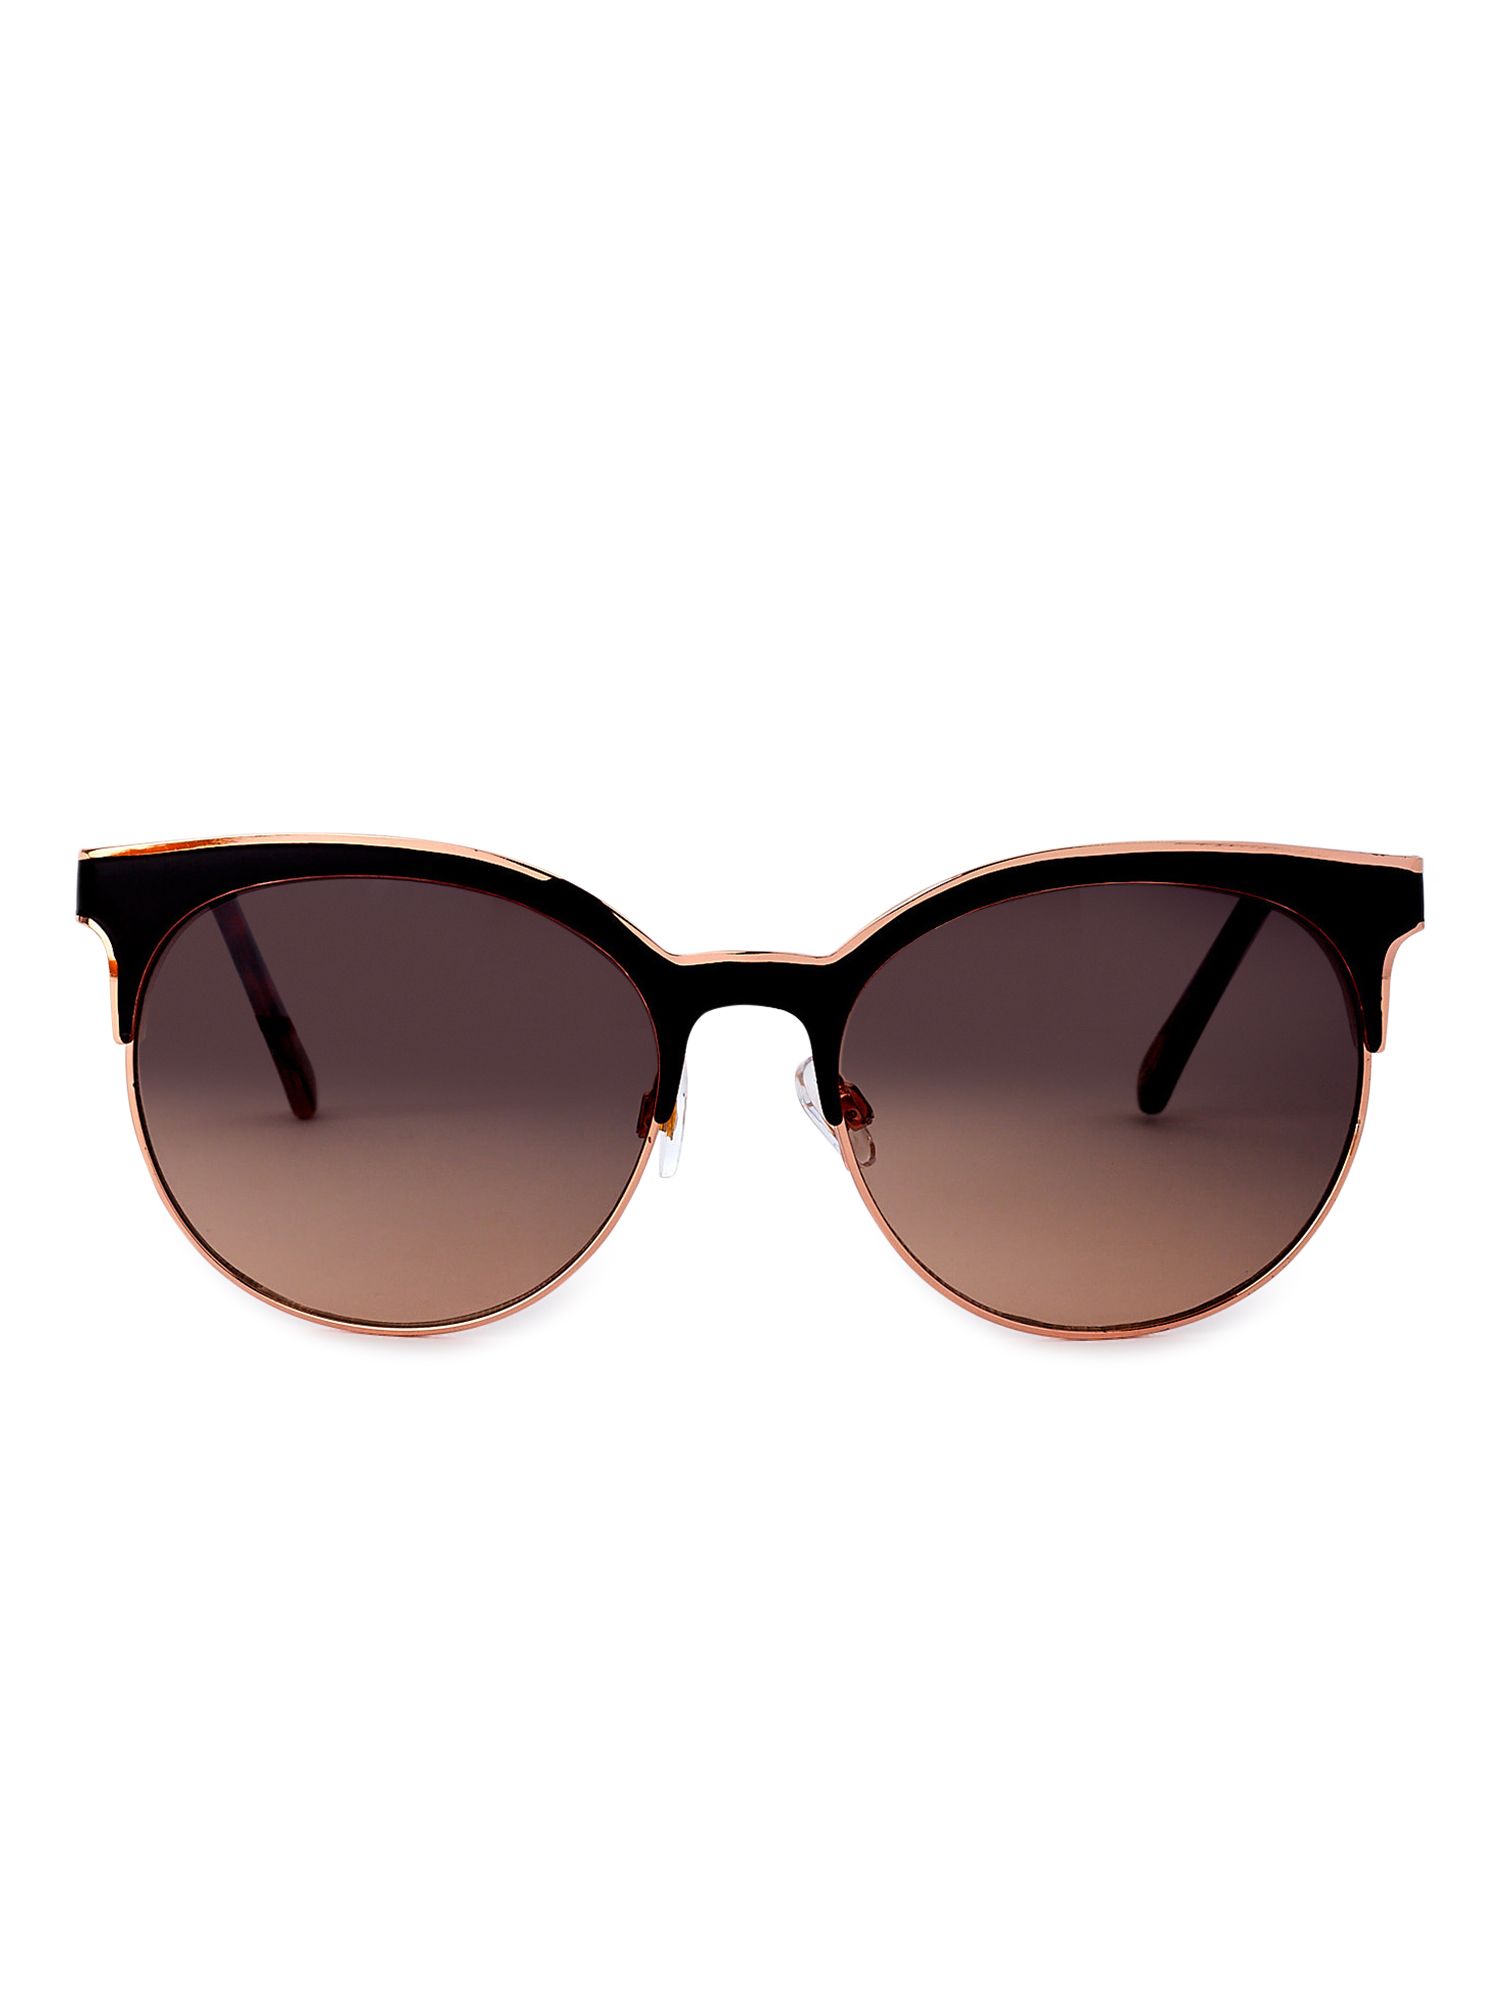 Scoop Women's Round Club Brown Sunglasses | Walmart (US)